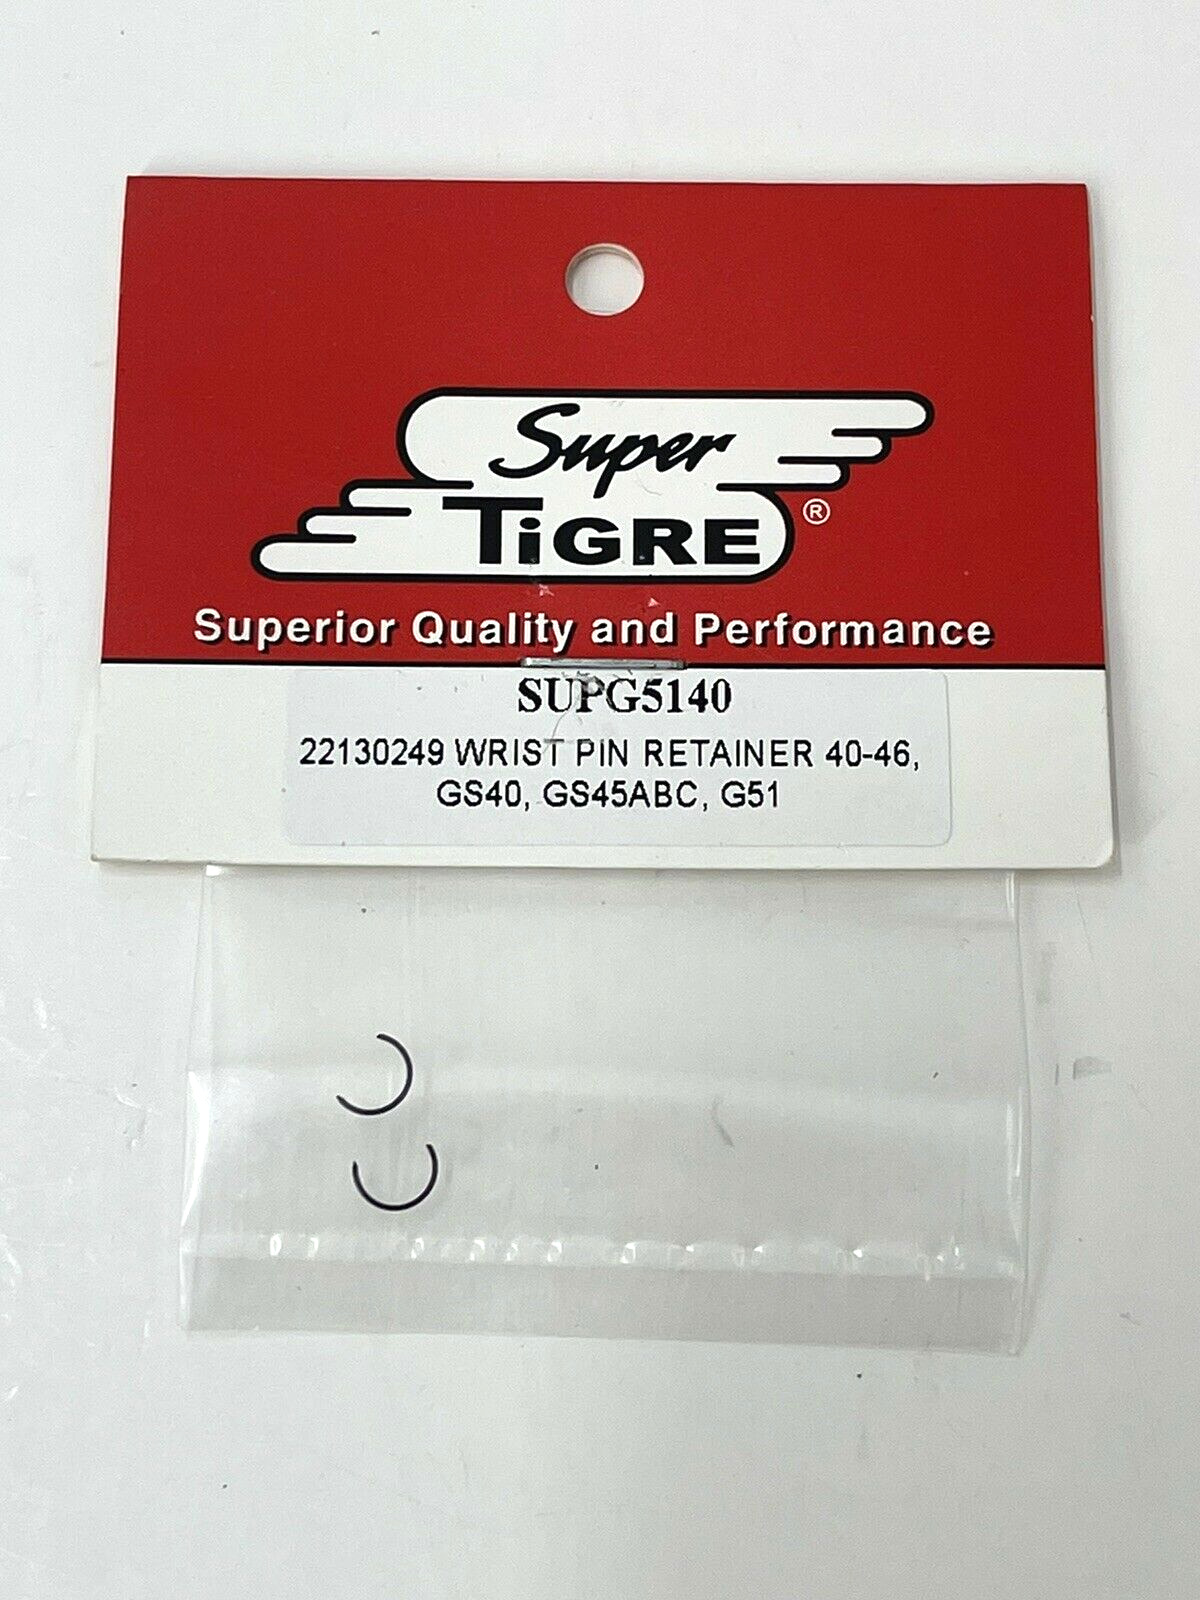 Super Tiger 22130249 Wrist Pin Retainer 40-46 GS40, GS34ABC, G51, SUPG5140